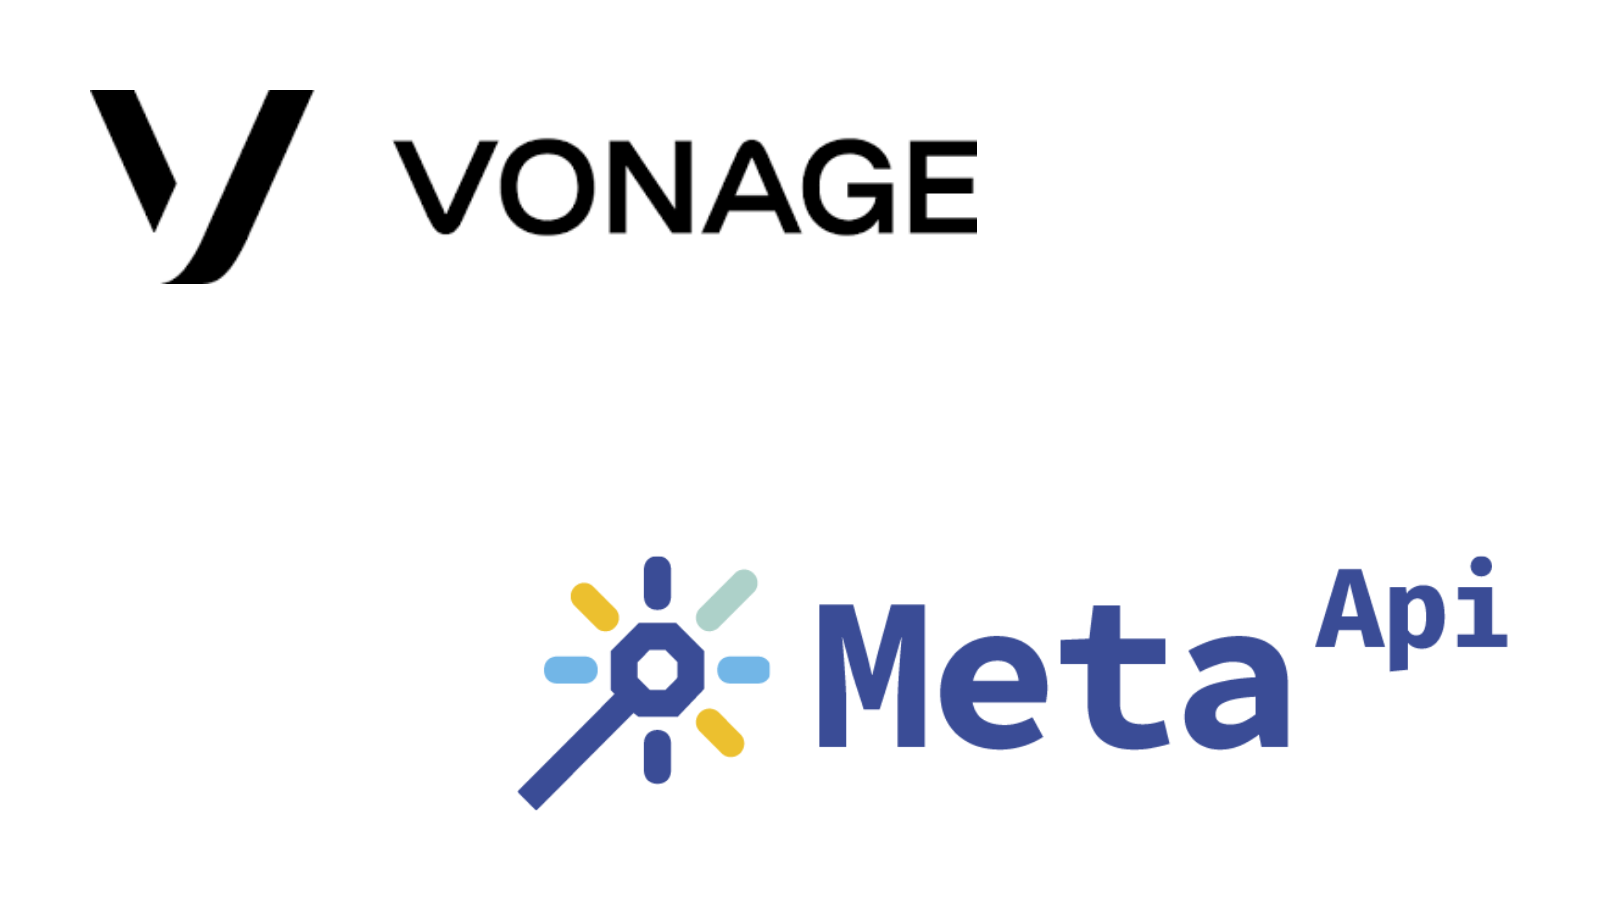 Meta API & Vonage partnership